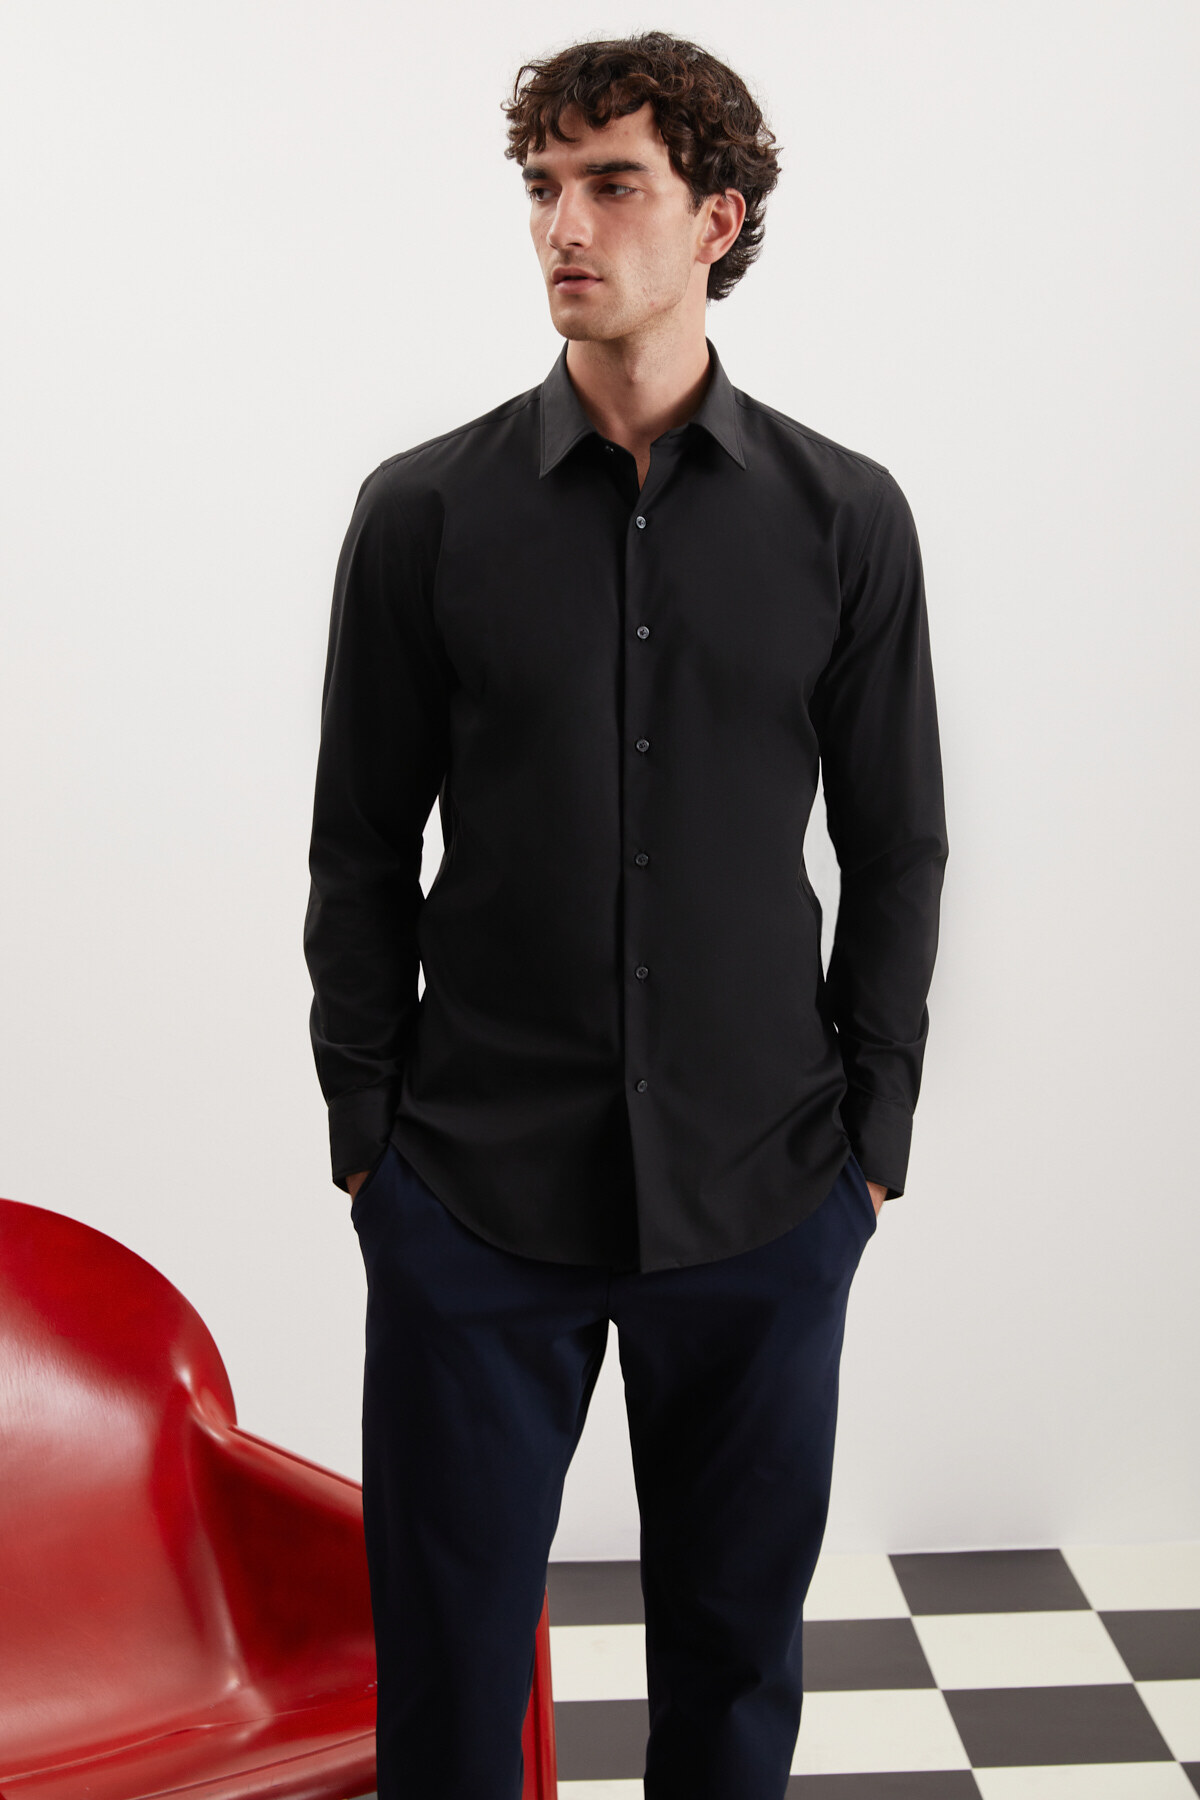 GRIMELANGE Branham Men's Ultra Flexible Cotton Elastane Fabric Slim Fit Poplin Black Shir